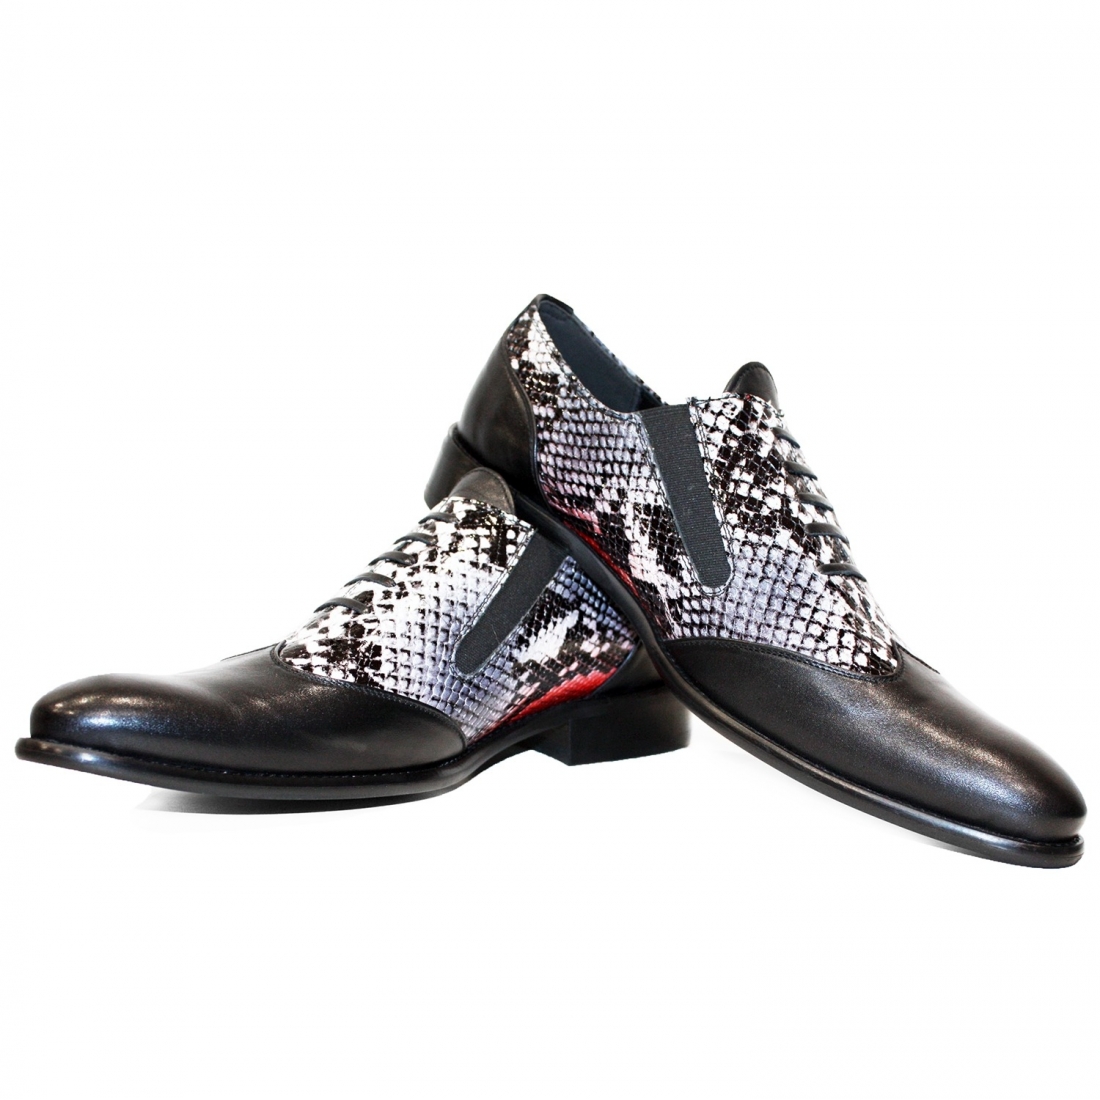 Modello Triumpherro - Loafers & Slip-Ons - Handmade Colorful Italian Leather Shoes